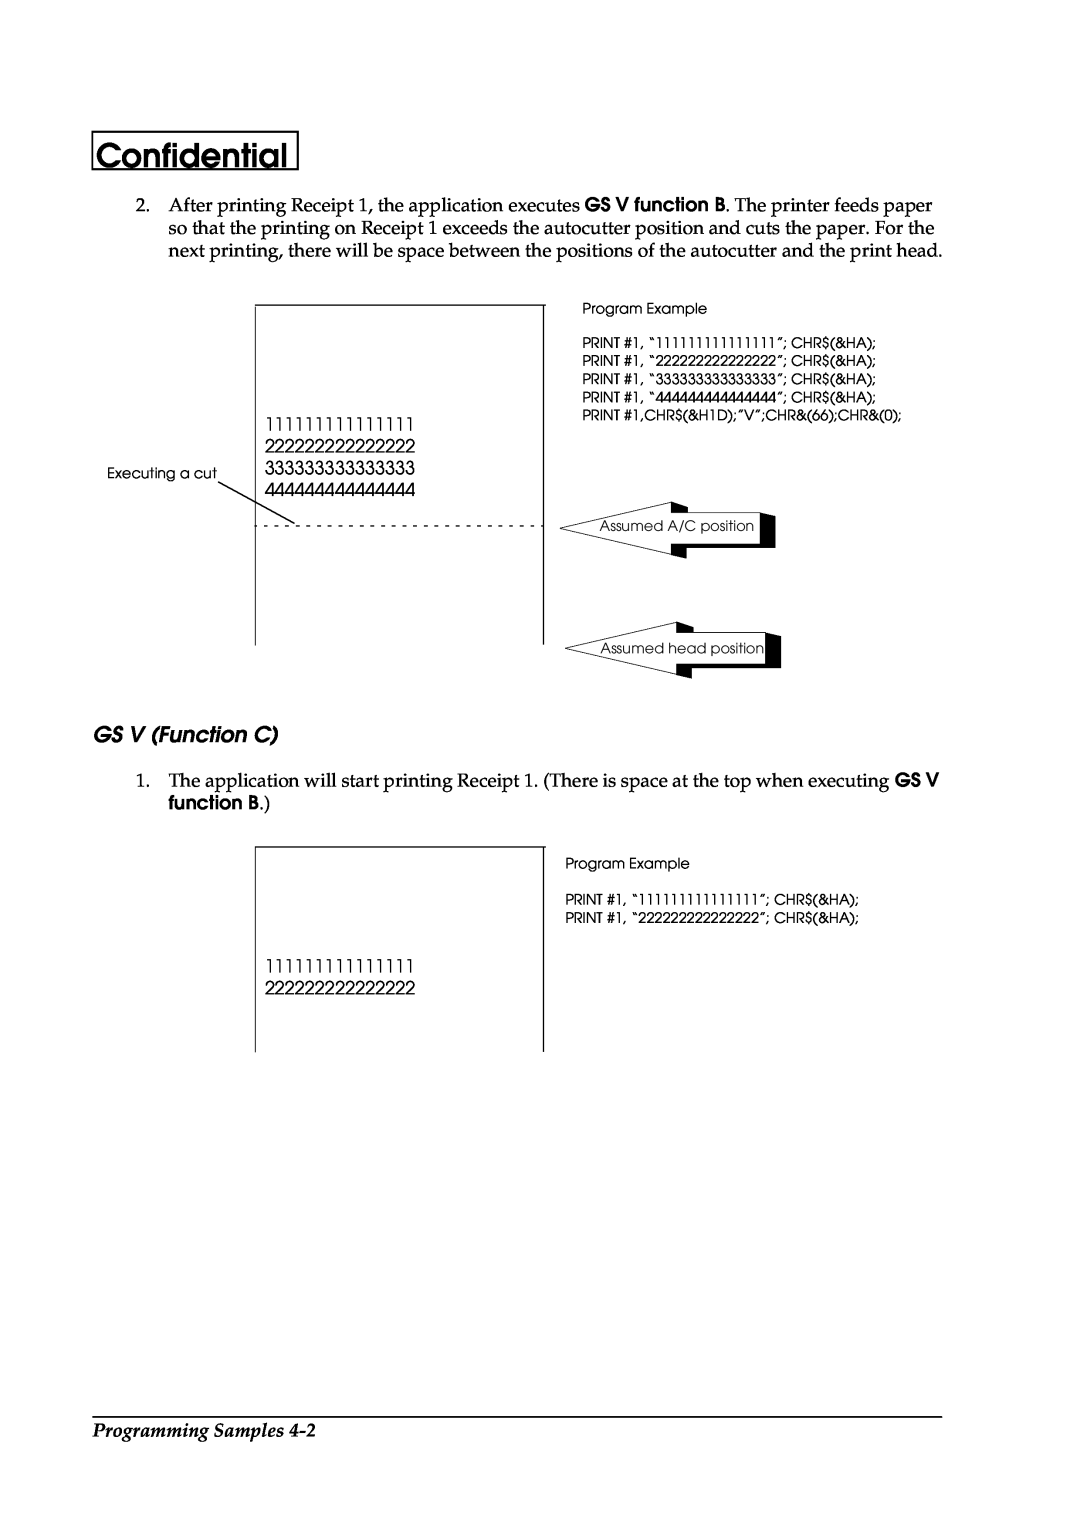 Epson U230 manual GS V Function C, Confidential, Programming Samples 